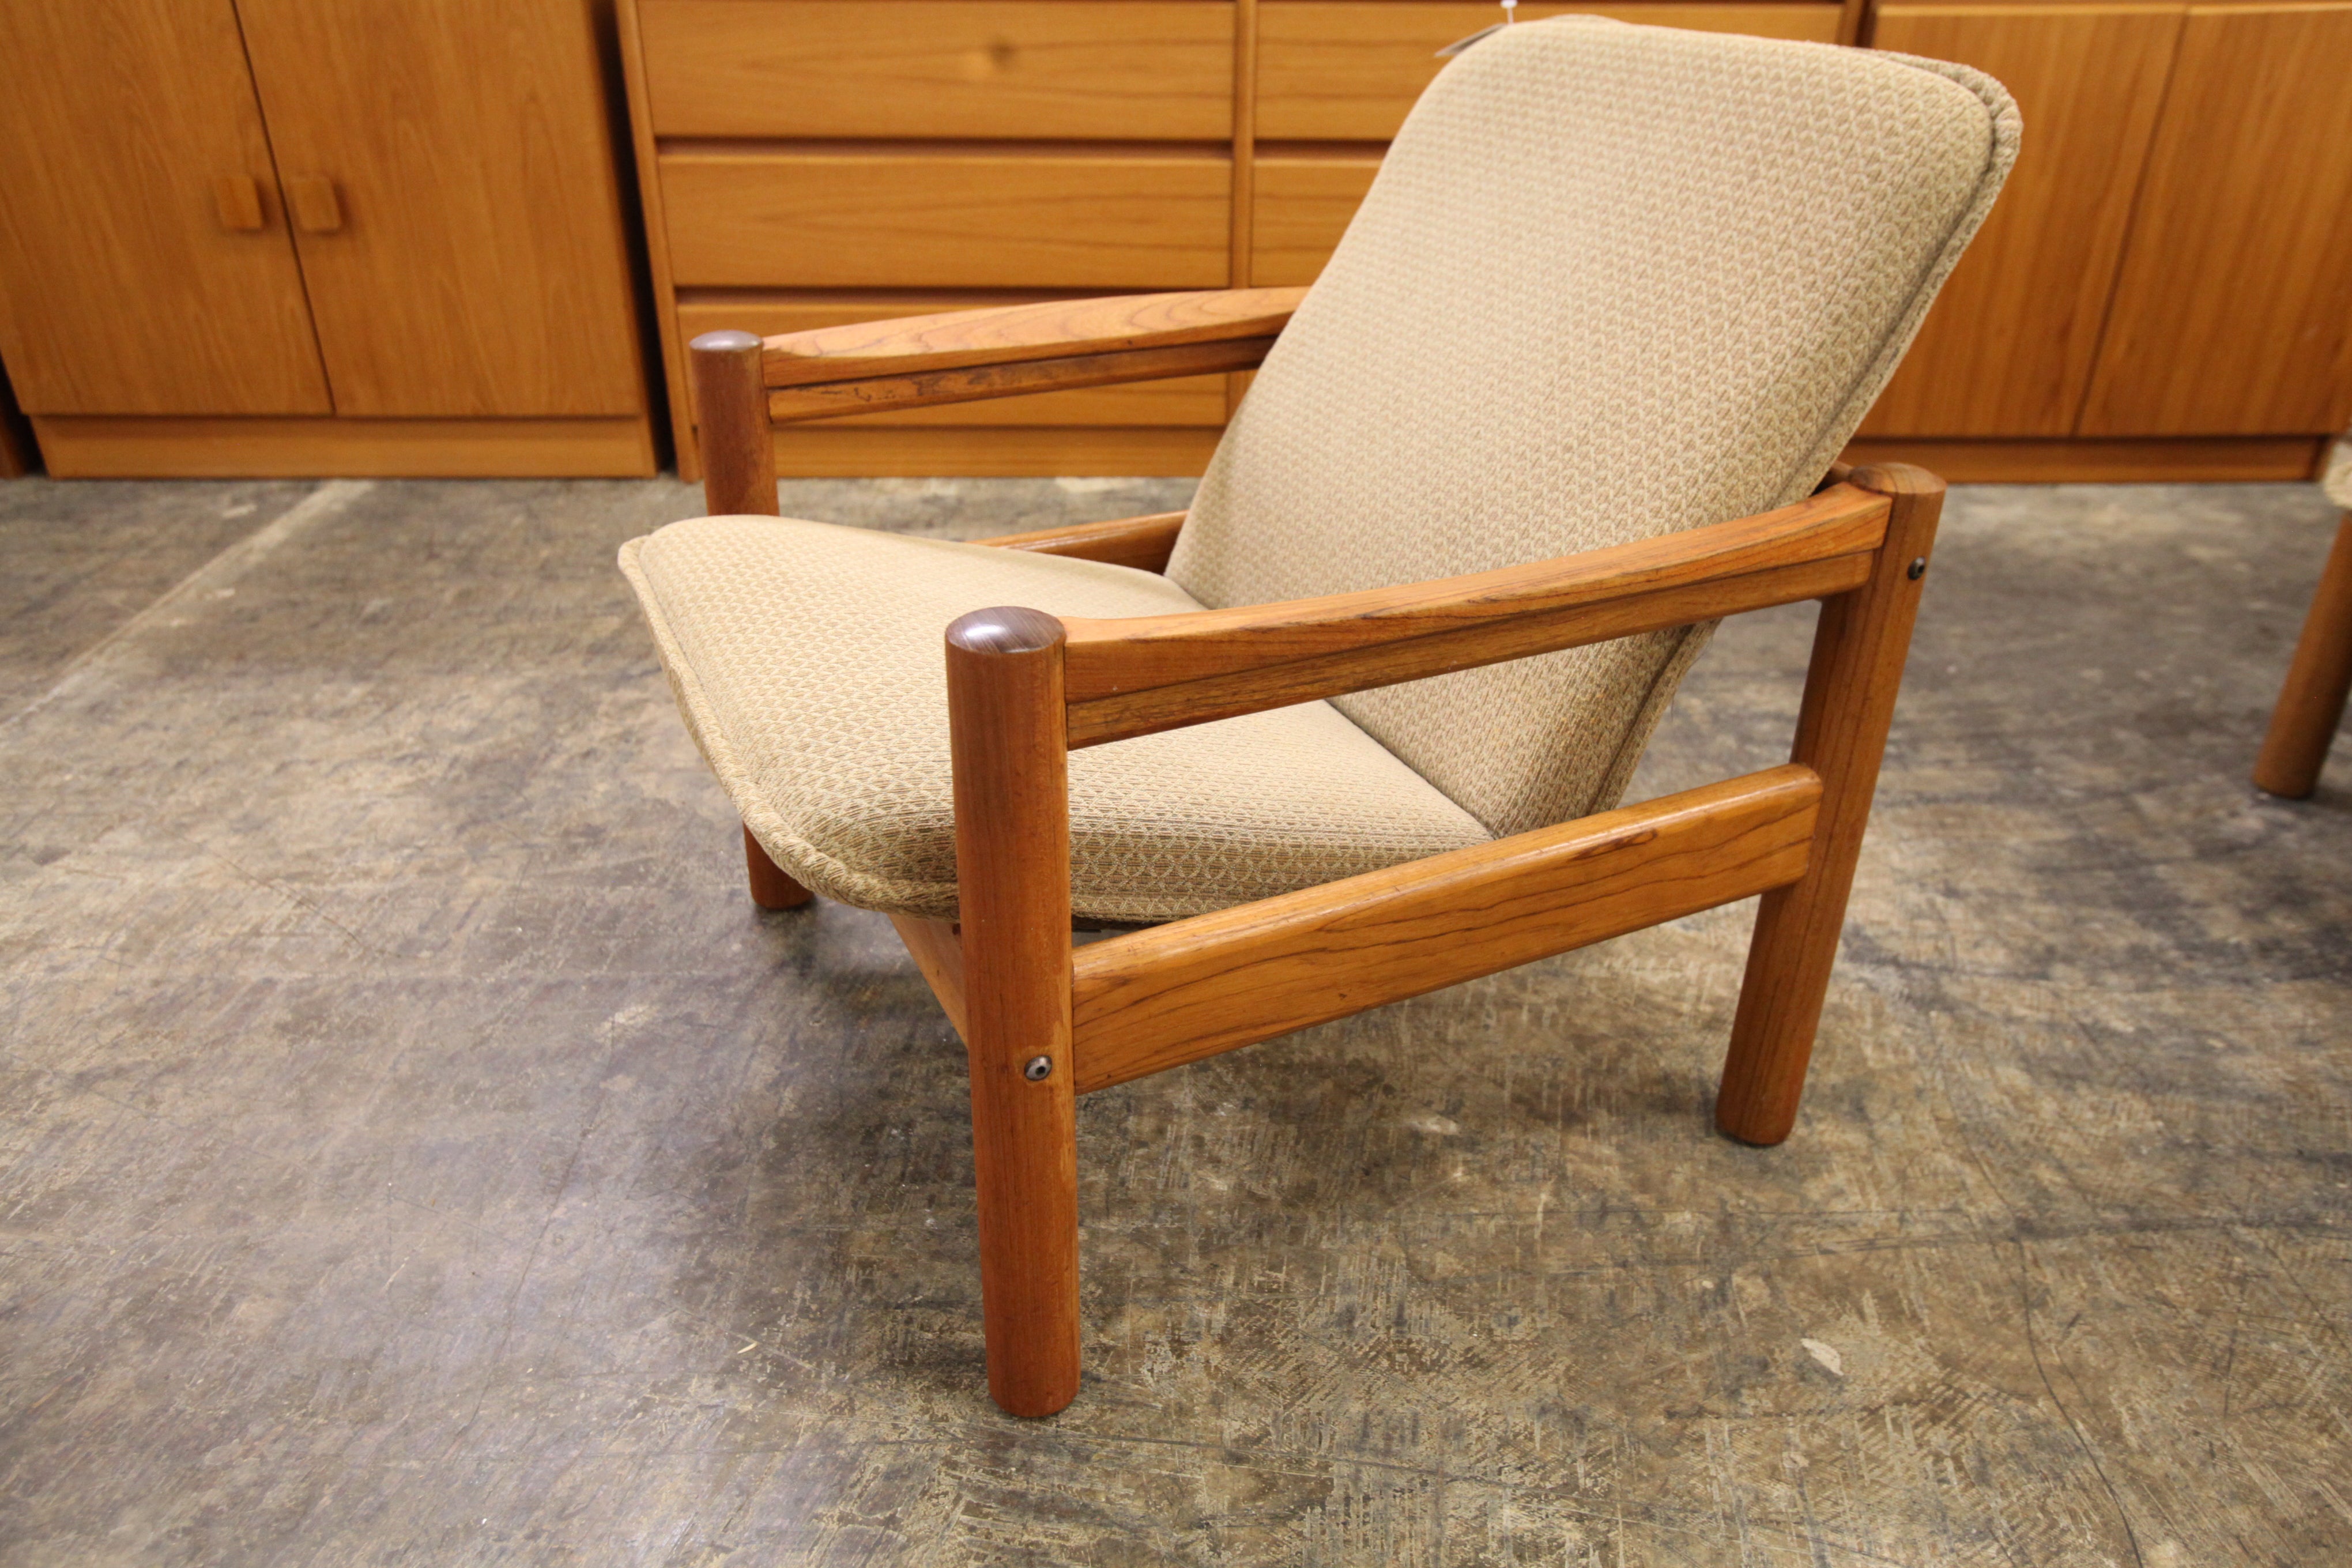 Vintage Danish Teak Lounge Chair by Domino Mobler (28"W x 31"D x 28"H)